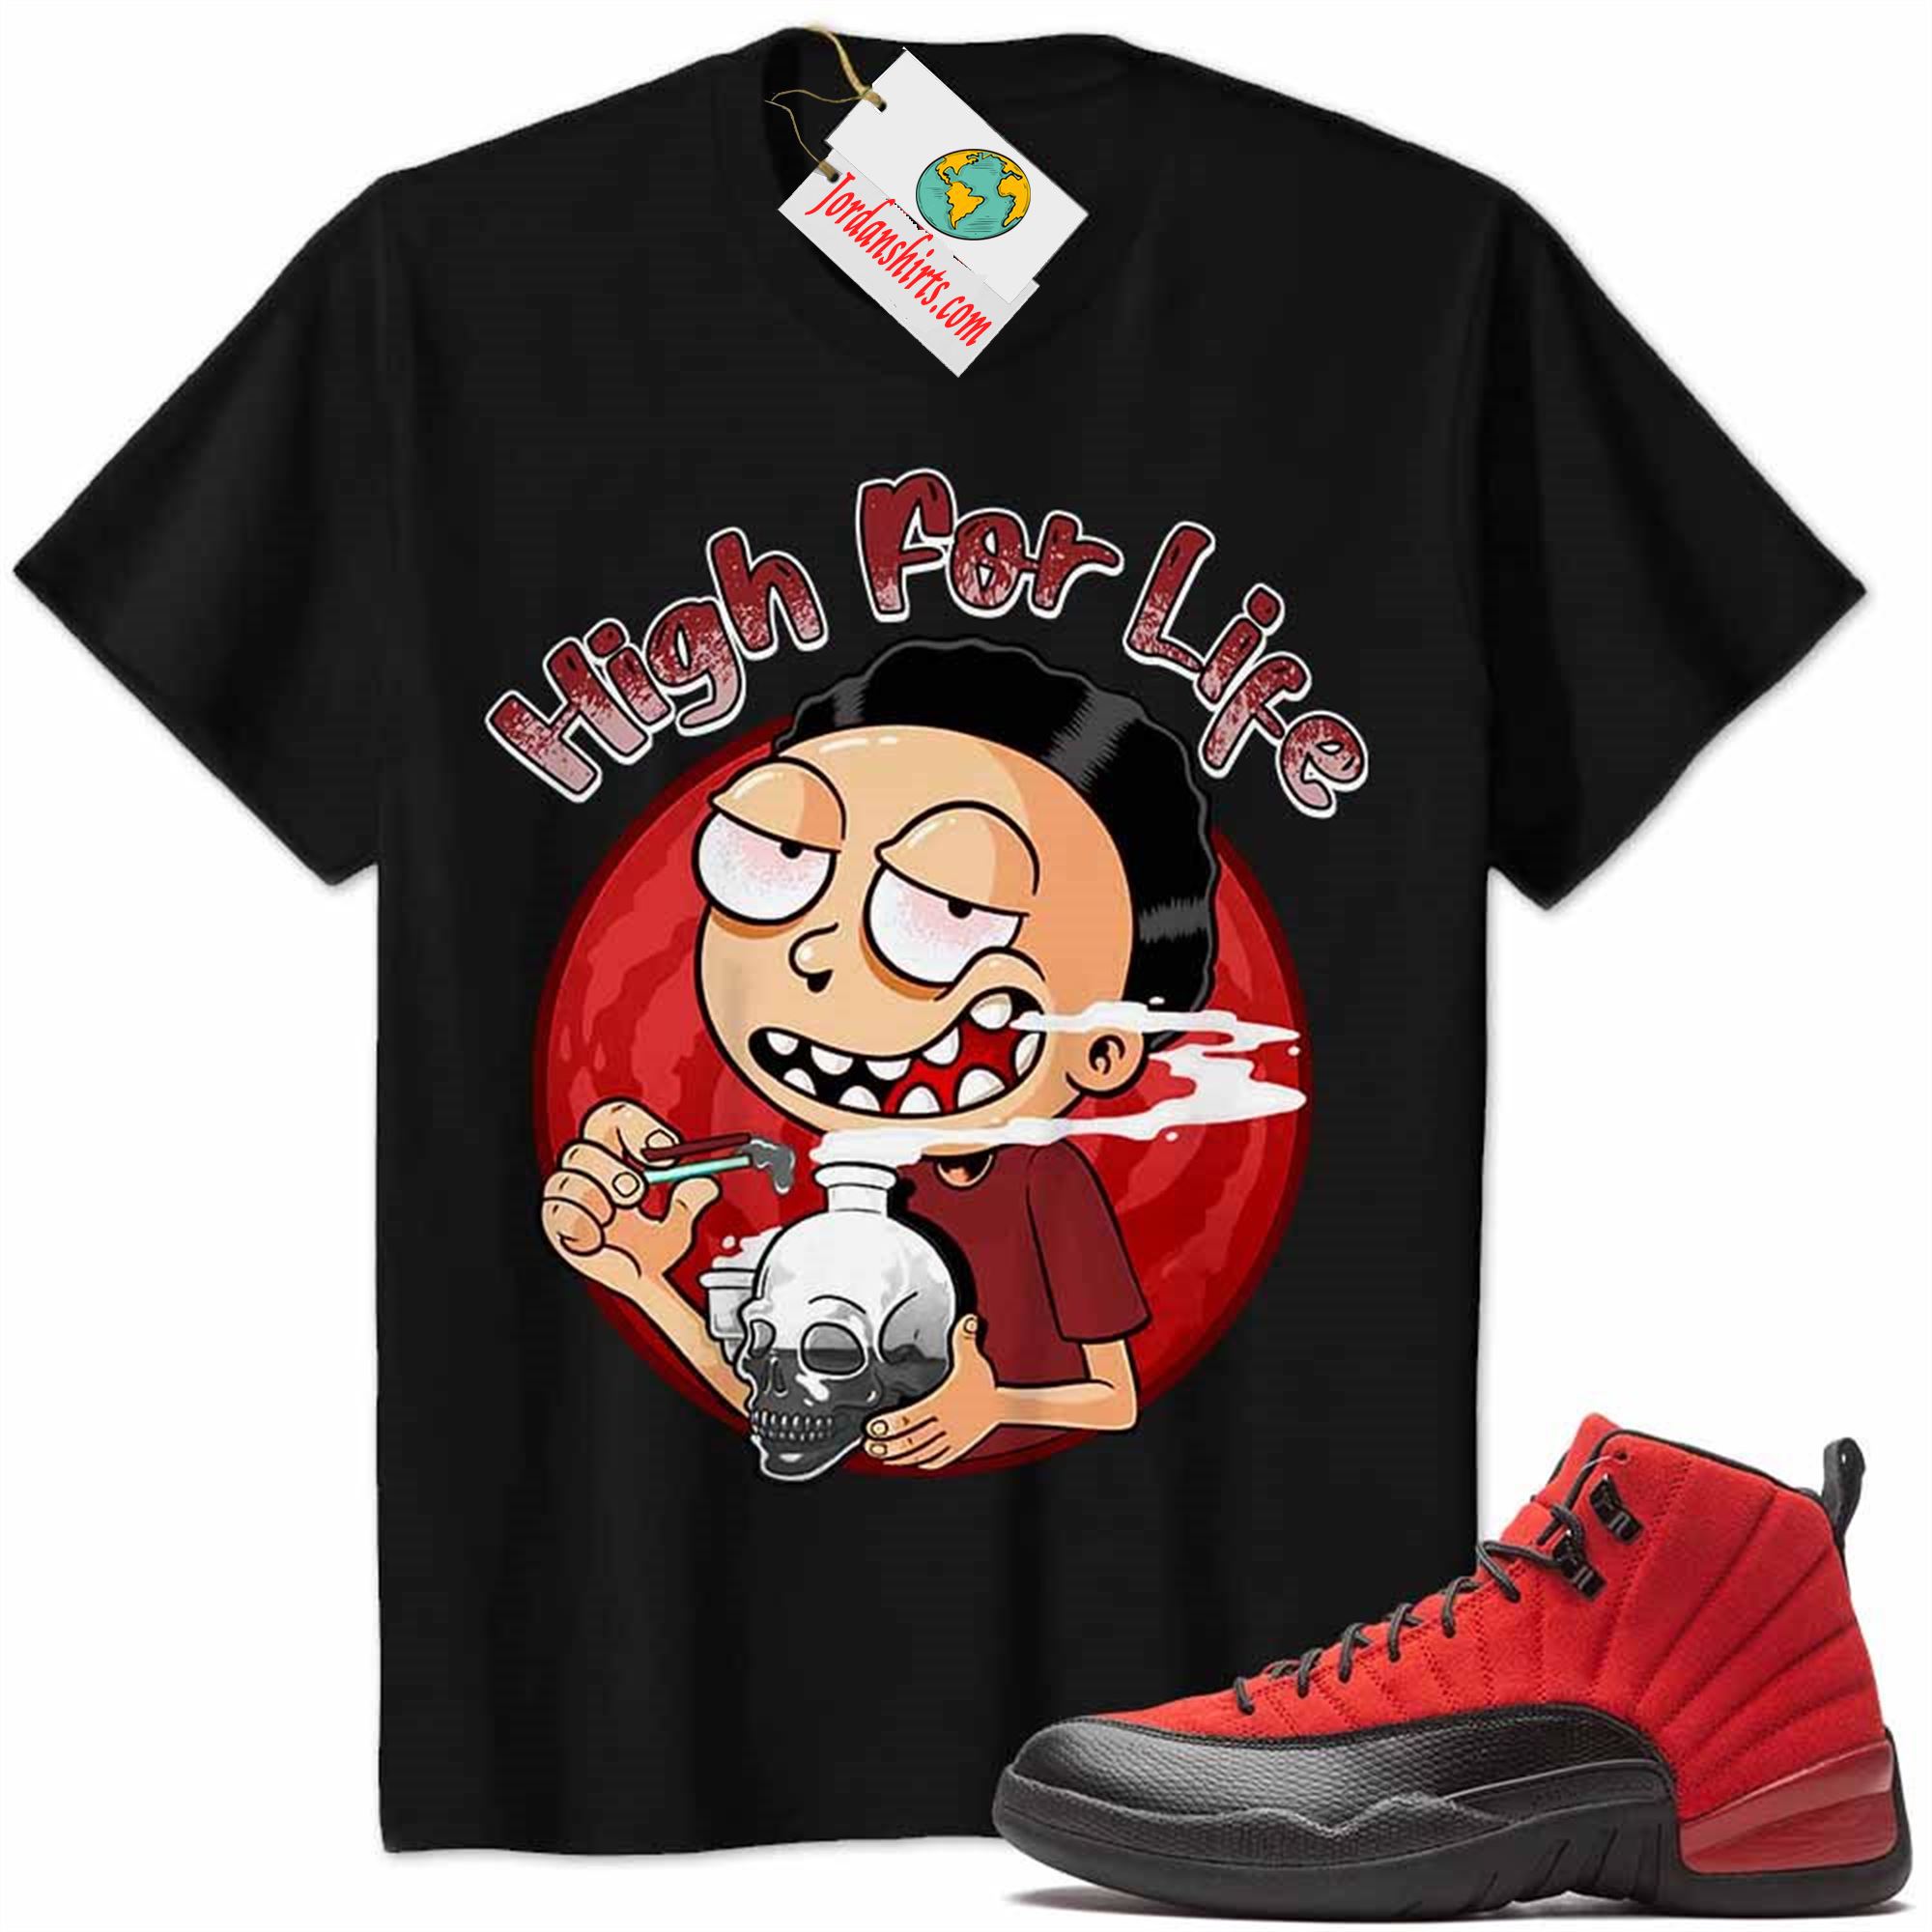 Jordan 12 Shirt, Jordan 12 Reverse Flu Game Shirt Morty High For Life Black Full Size Up To 5xl